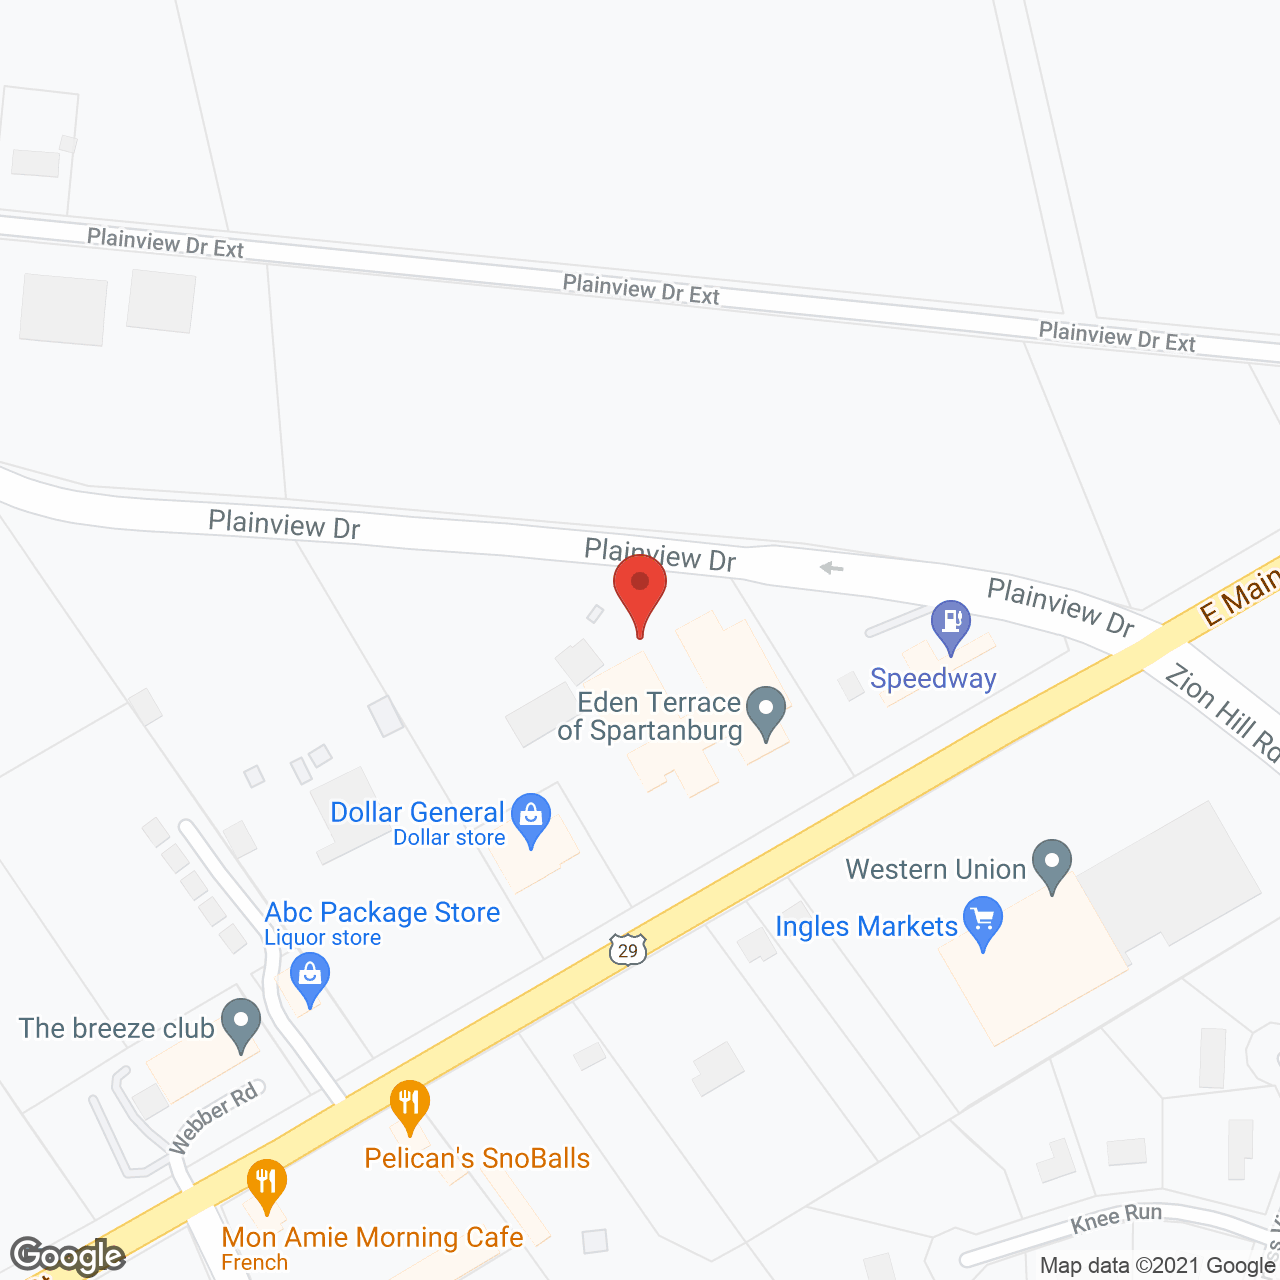 Eden Terrace of Spartanburg in google map